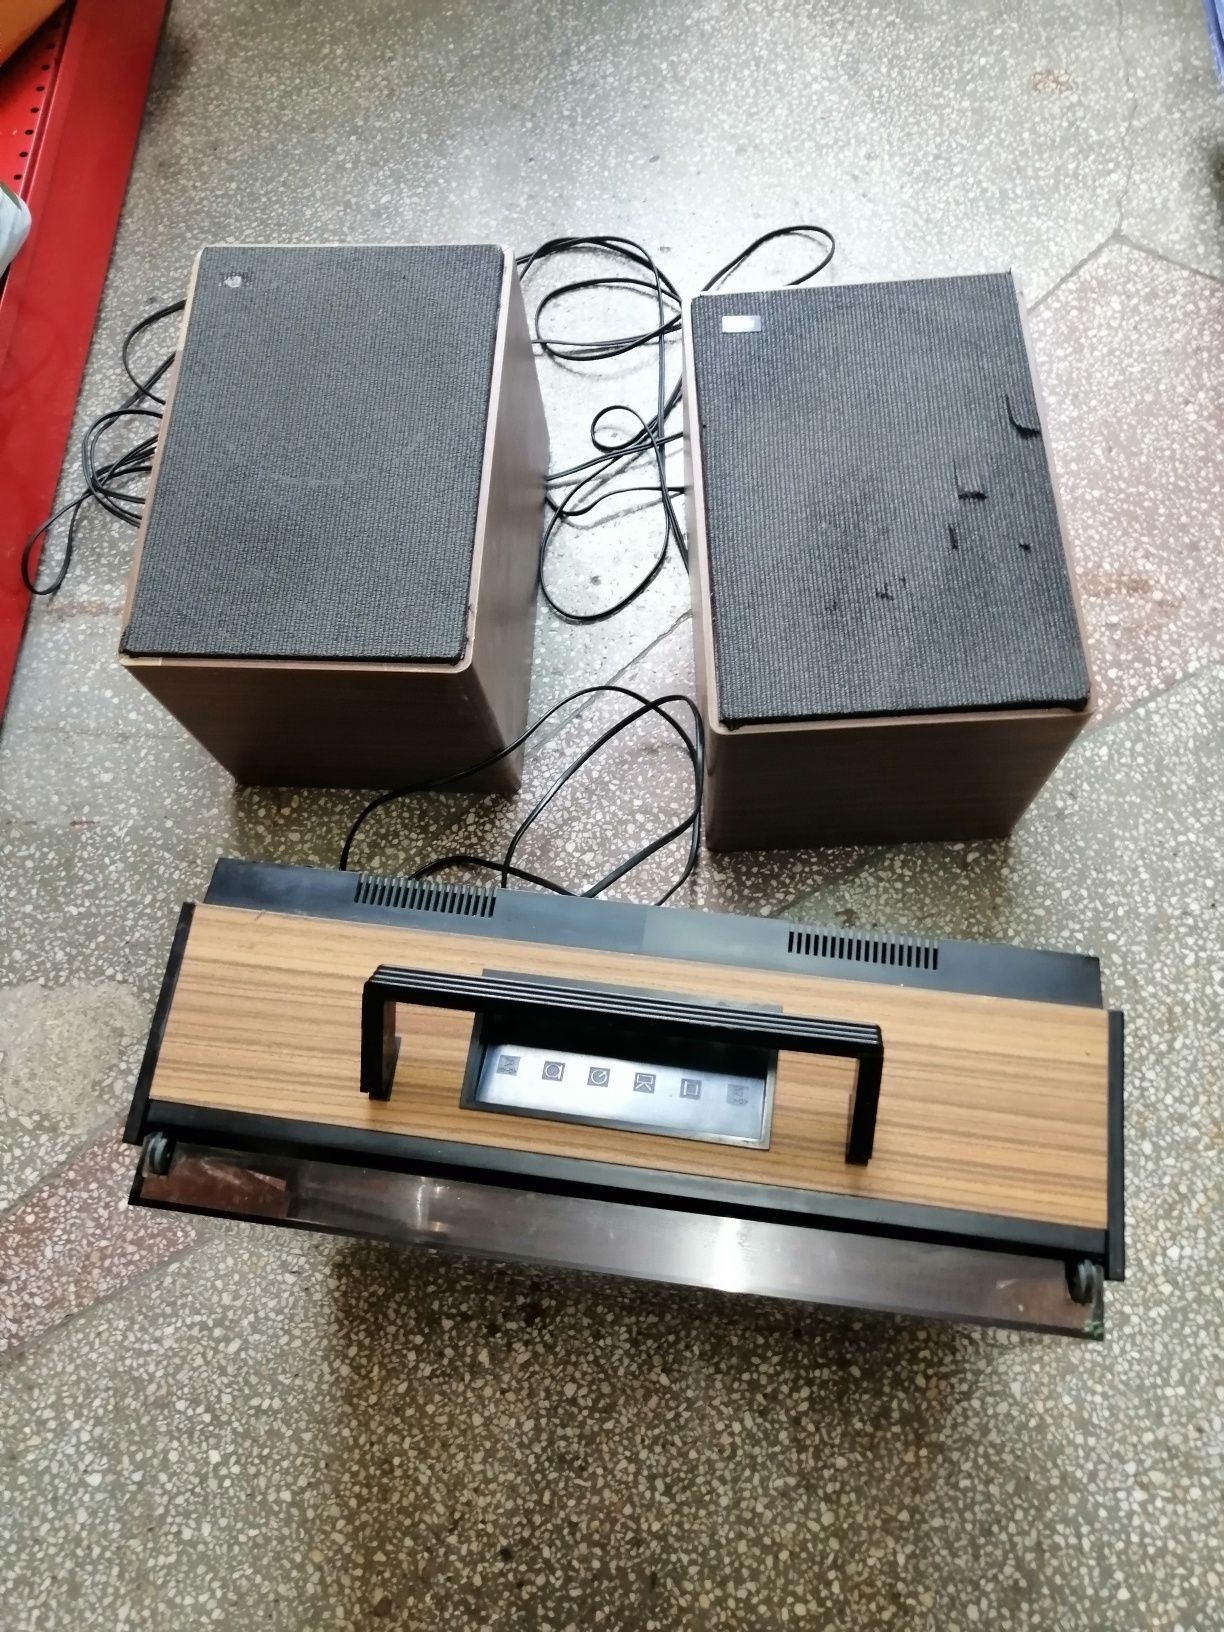 Magnetofon vechi M 2405 S Stereo boxe